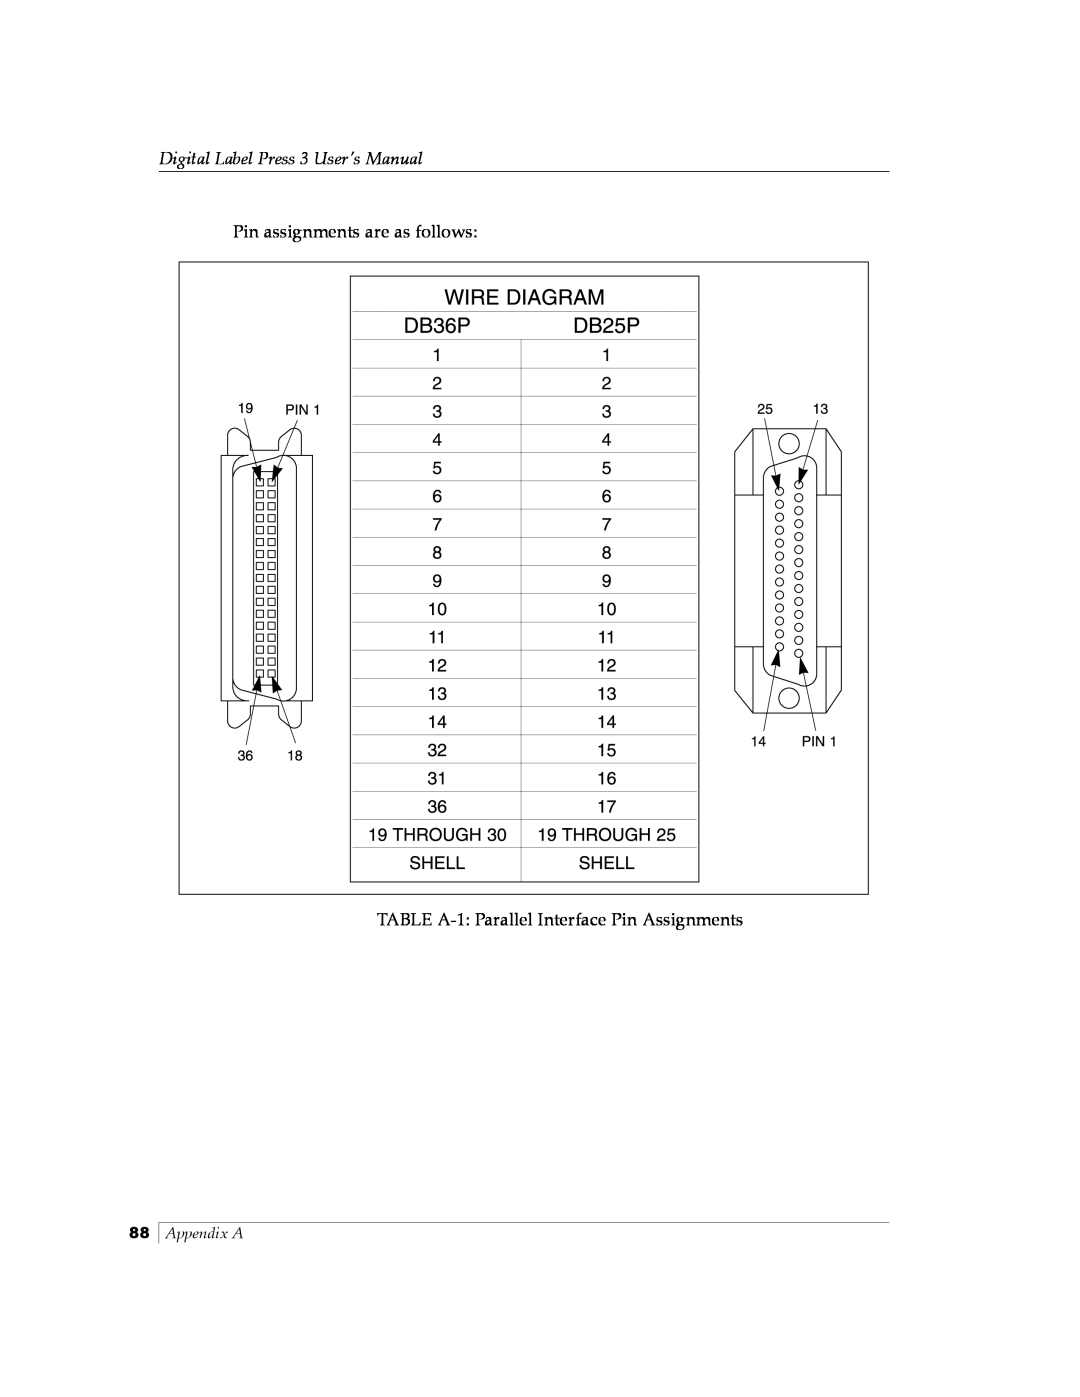 Primera Technology 510212 manual Digital Label Press 3 User’s Manual, Pin assignments are as follows, Appendix A 